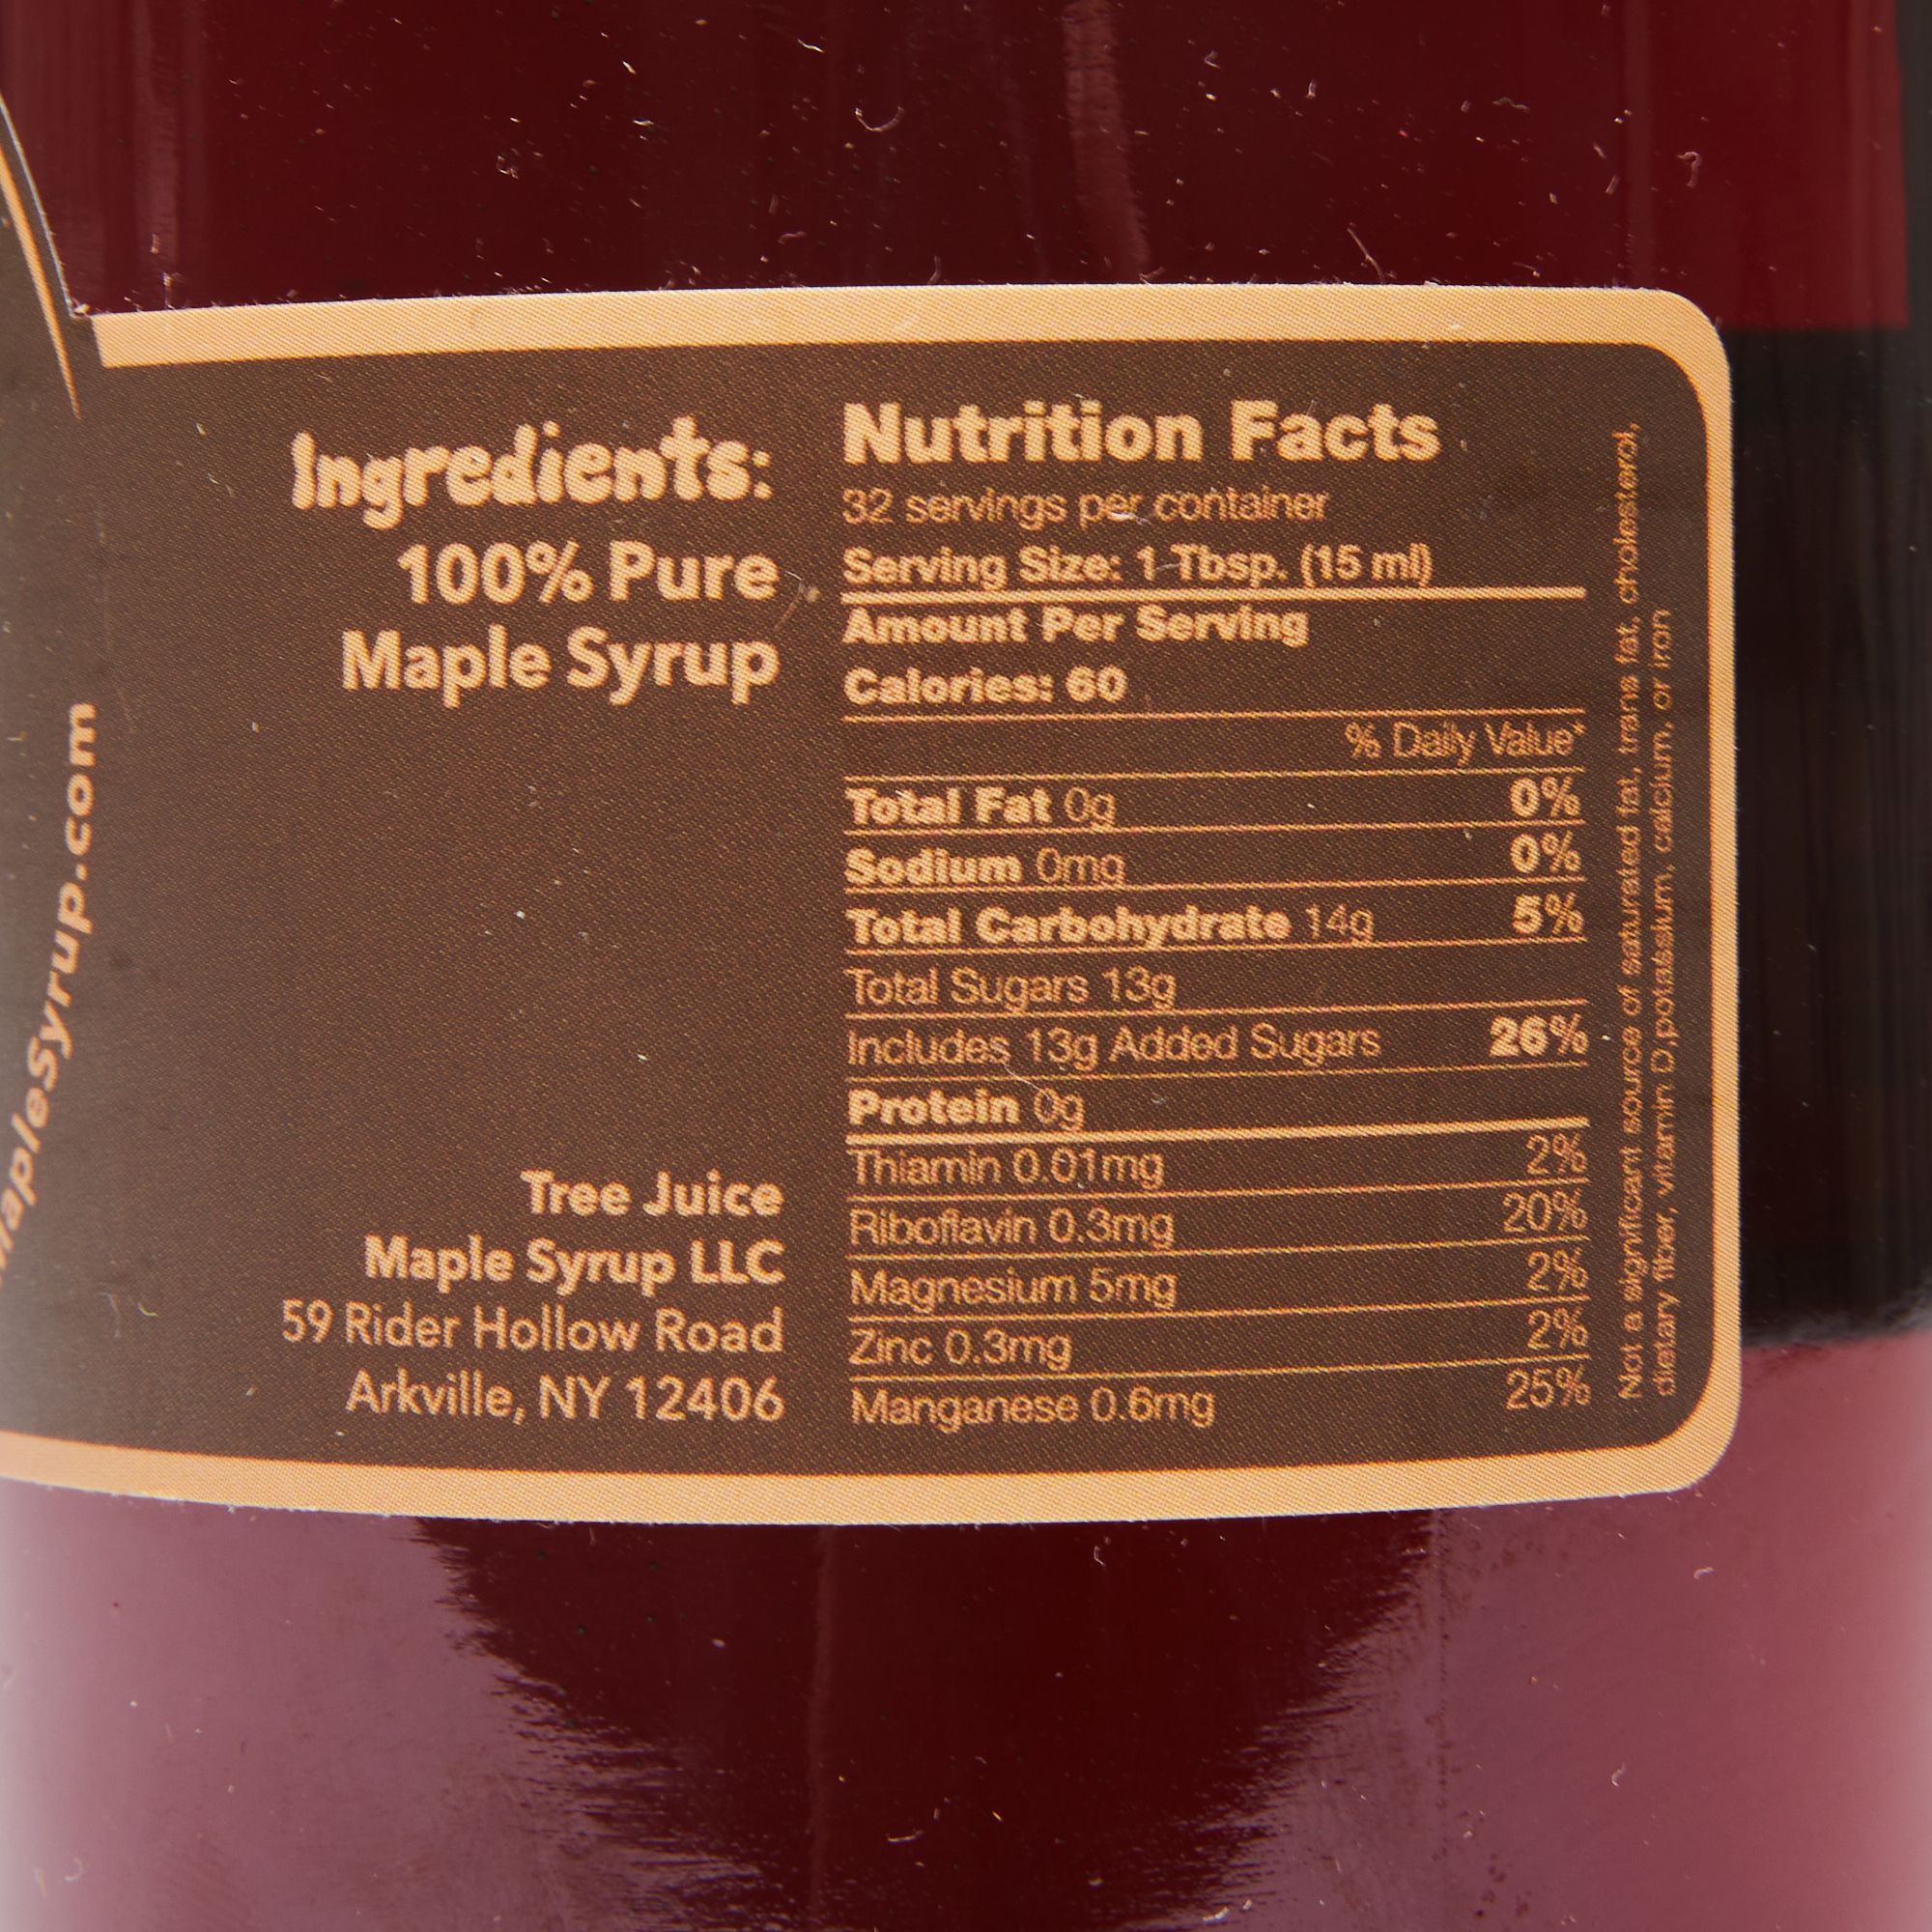 Tree Juice ingredients on bottle label